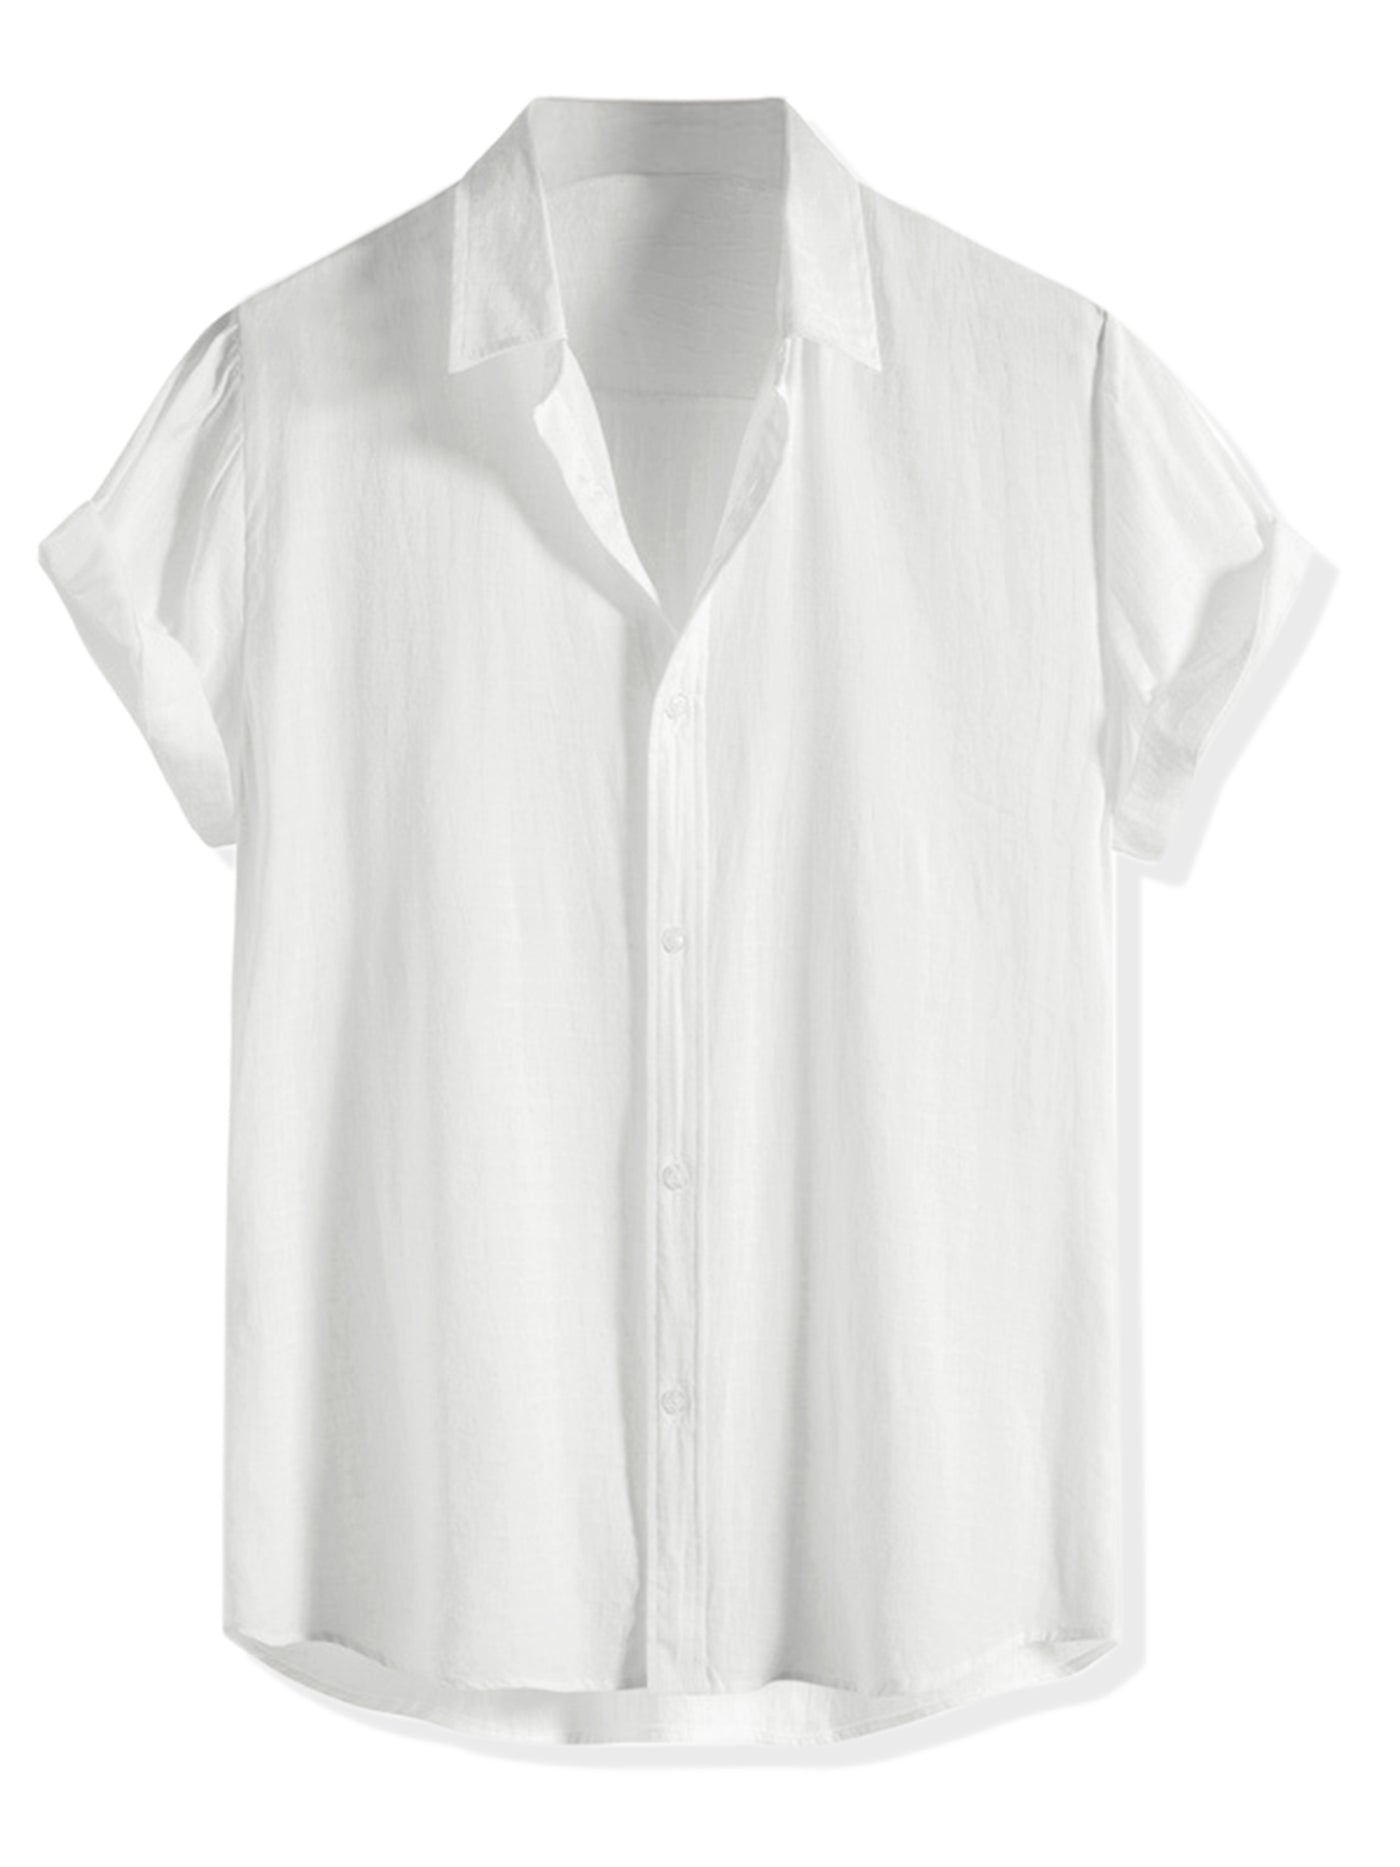 Bublédon Summer Shirts for Men's Solid Color Short Sleeve Button Down Regular Fit Hawaiian Shirt Tops